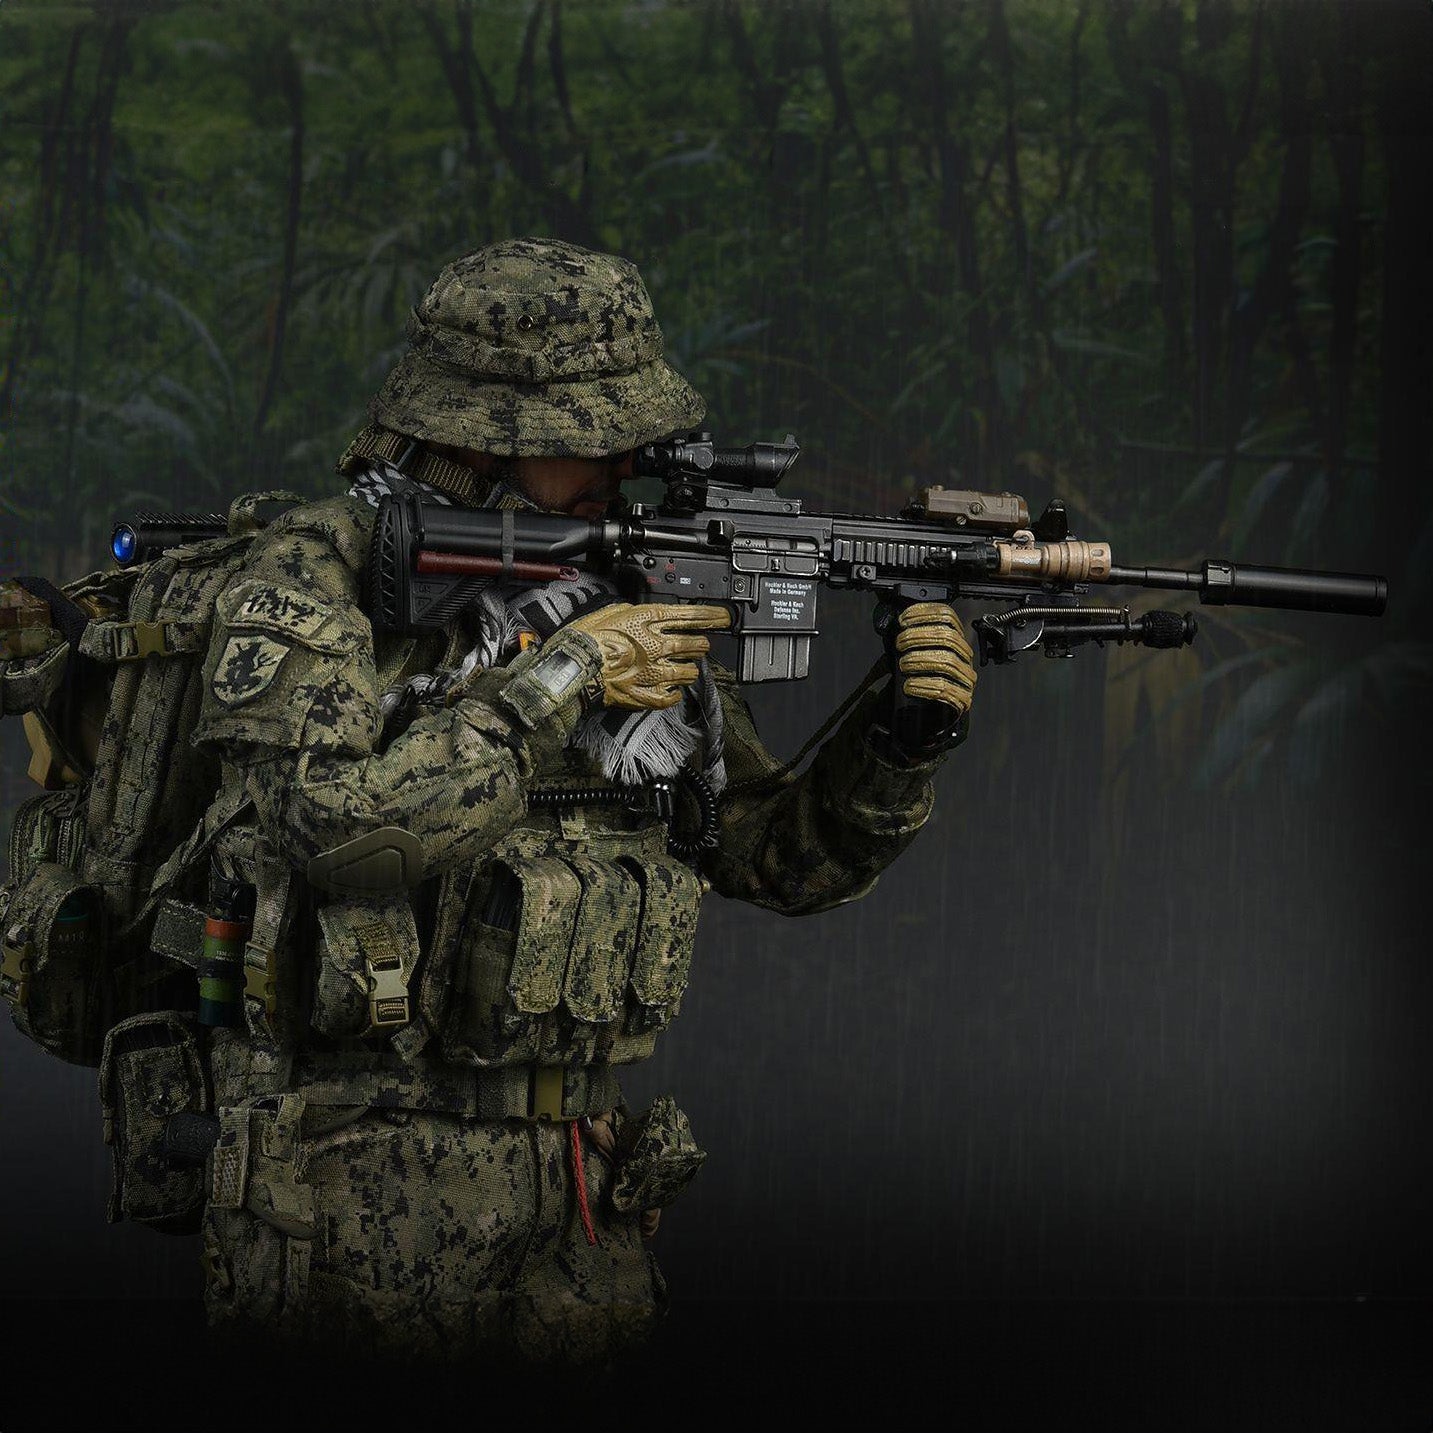 Soldier Story - SS136 - Naval Special Warfare Tier 1 Operator Recon Sniper (GA 2)